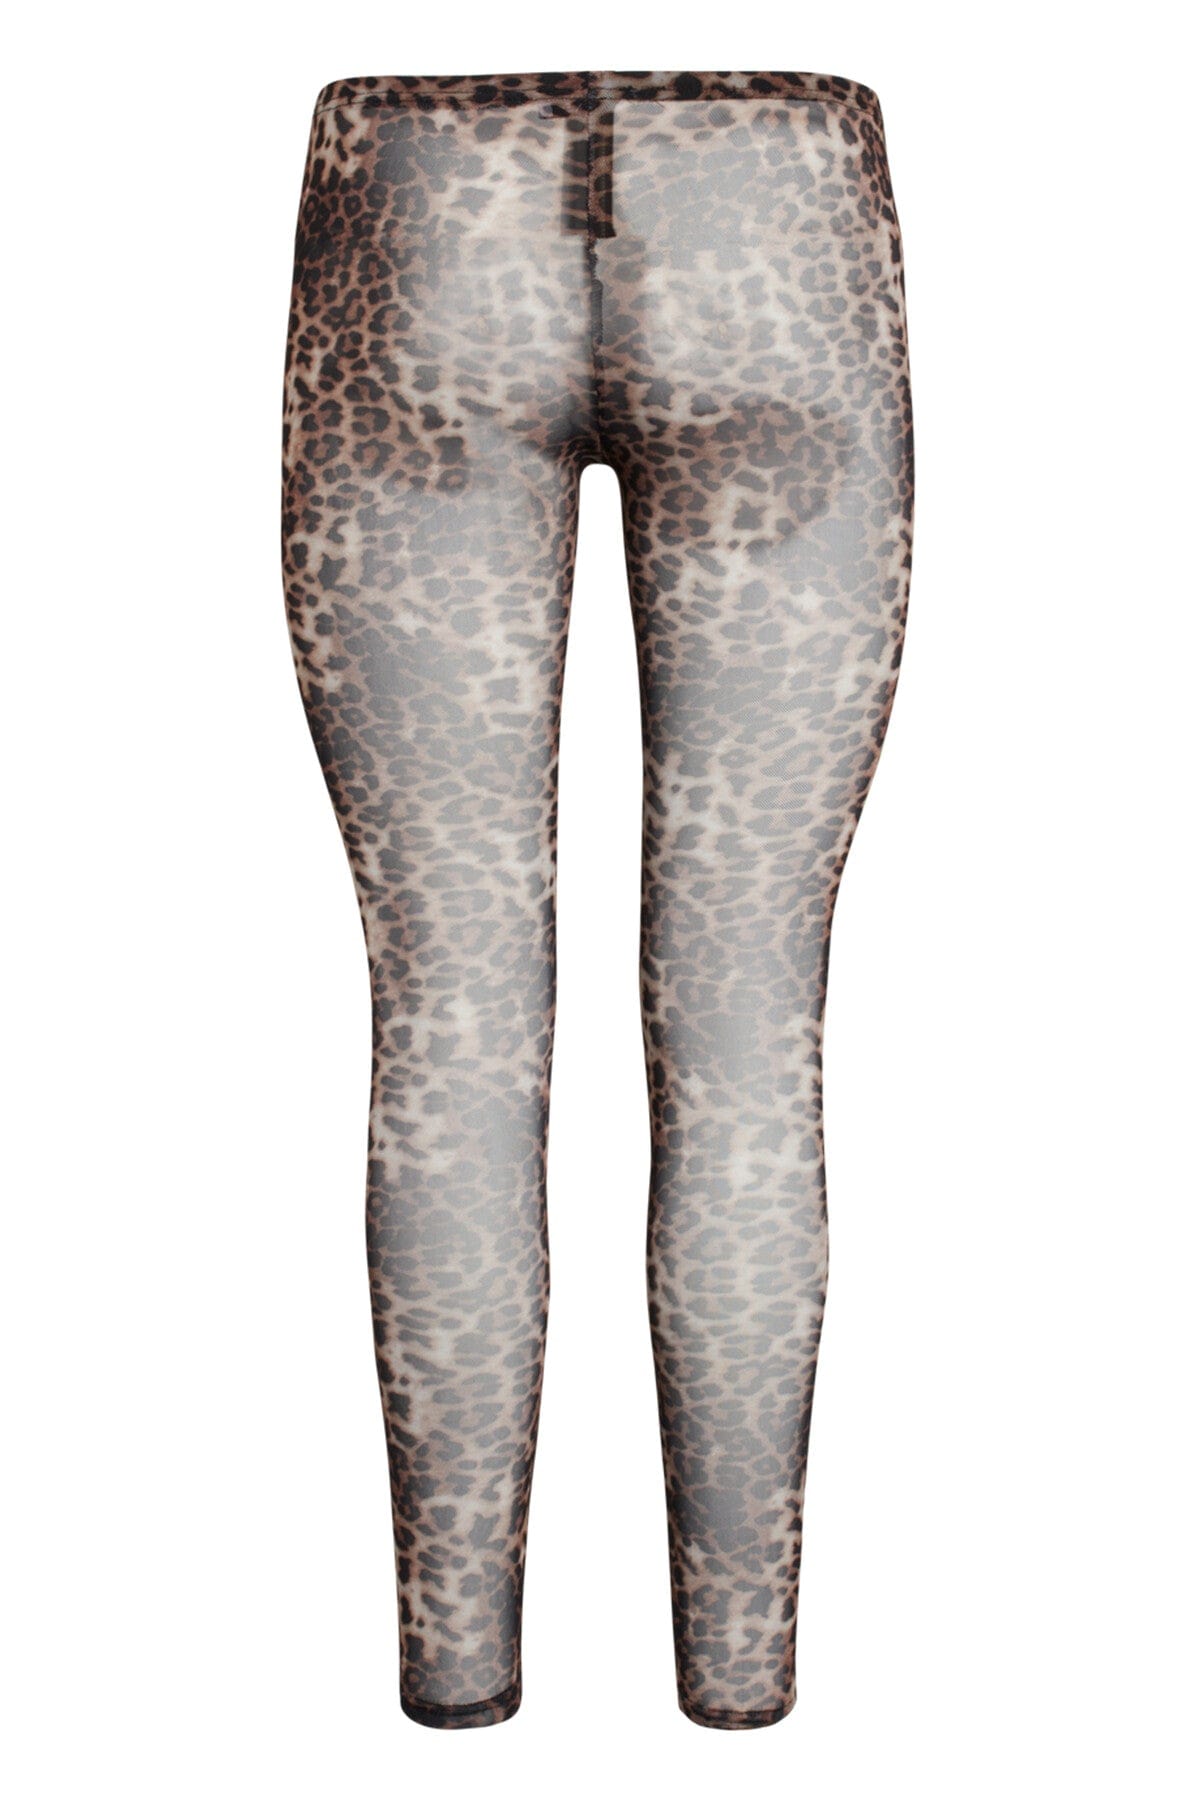 Sisters Point Underdele Sisters Point - Love Leggings - Leopard print